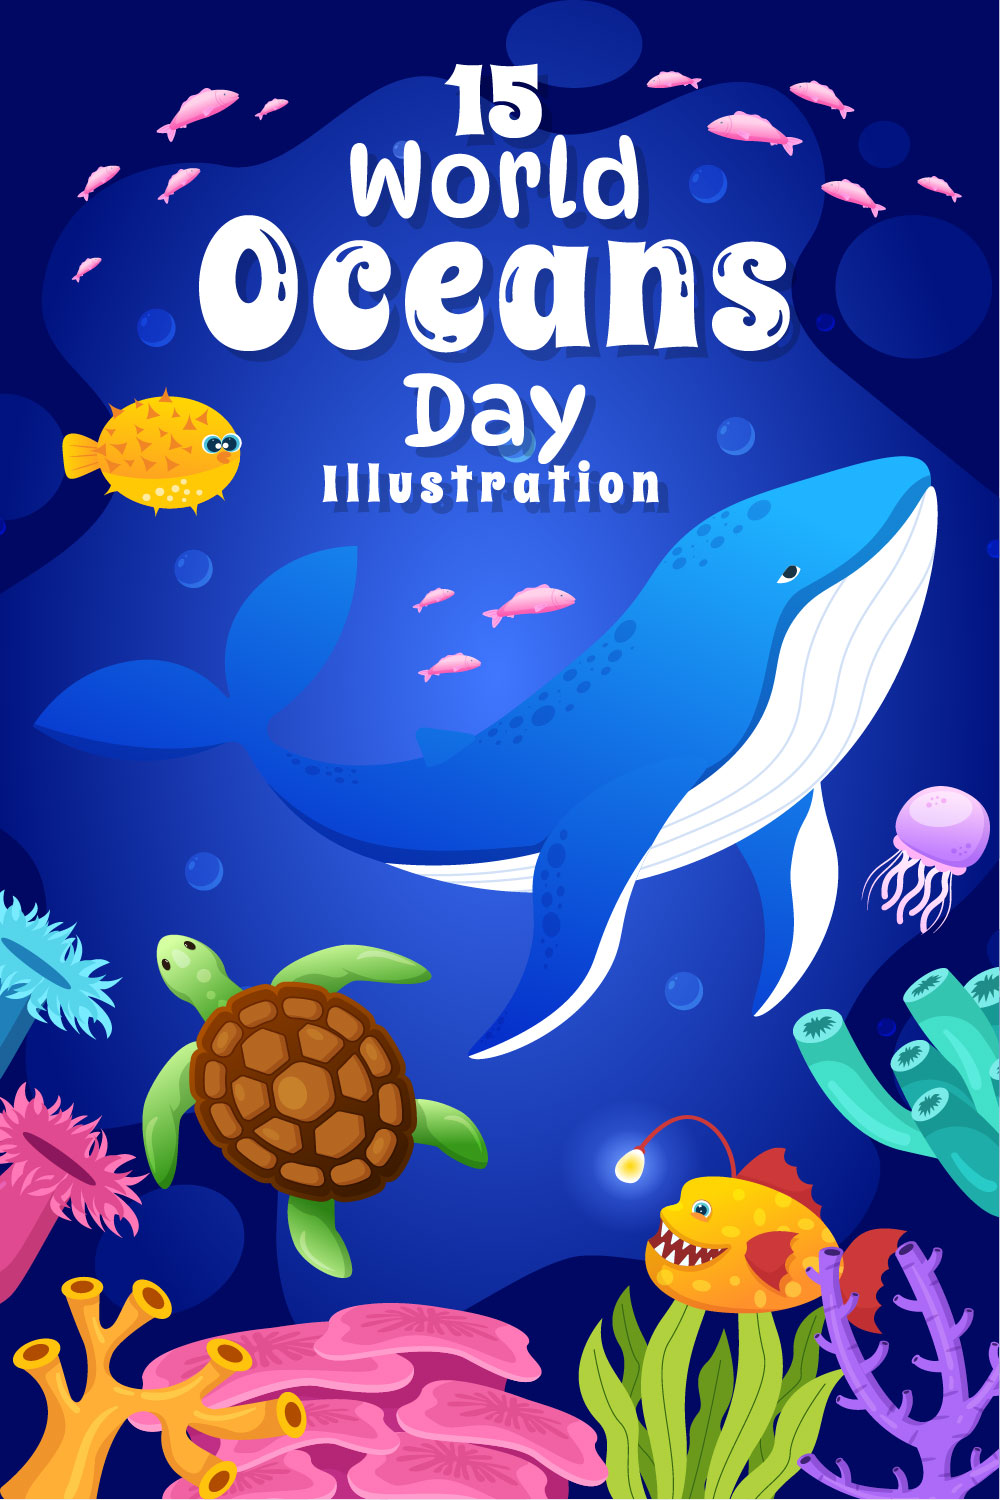 15 World Oceans Day Illustration pinterest preview image.